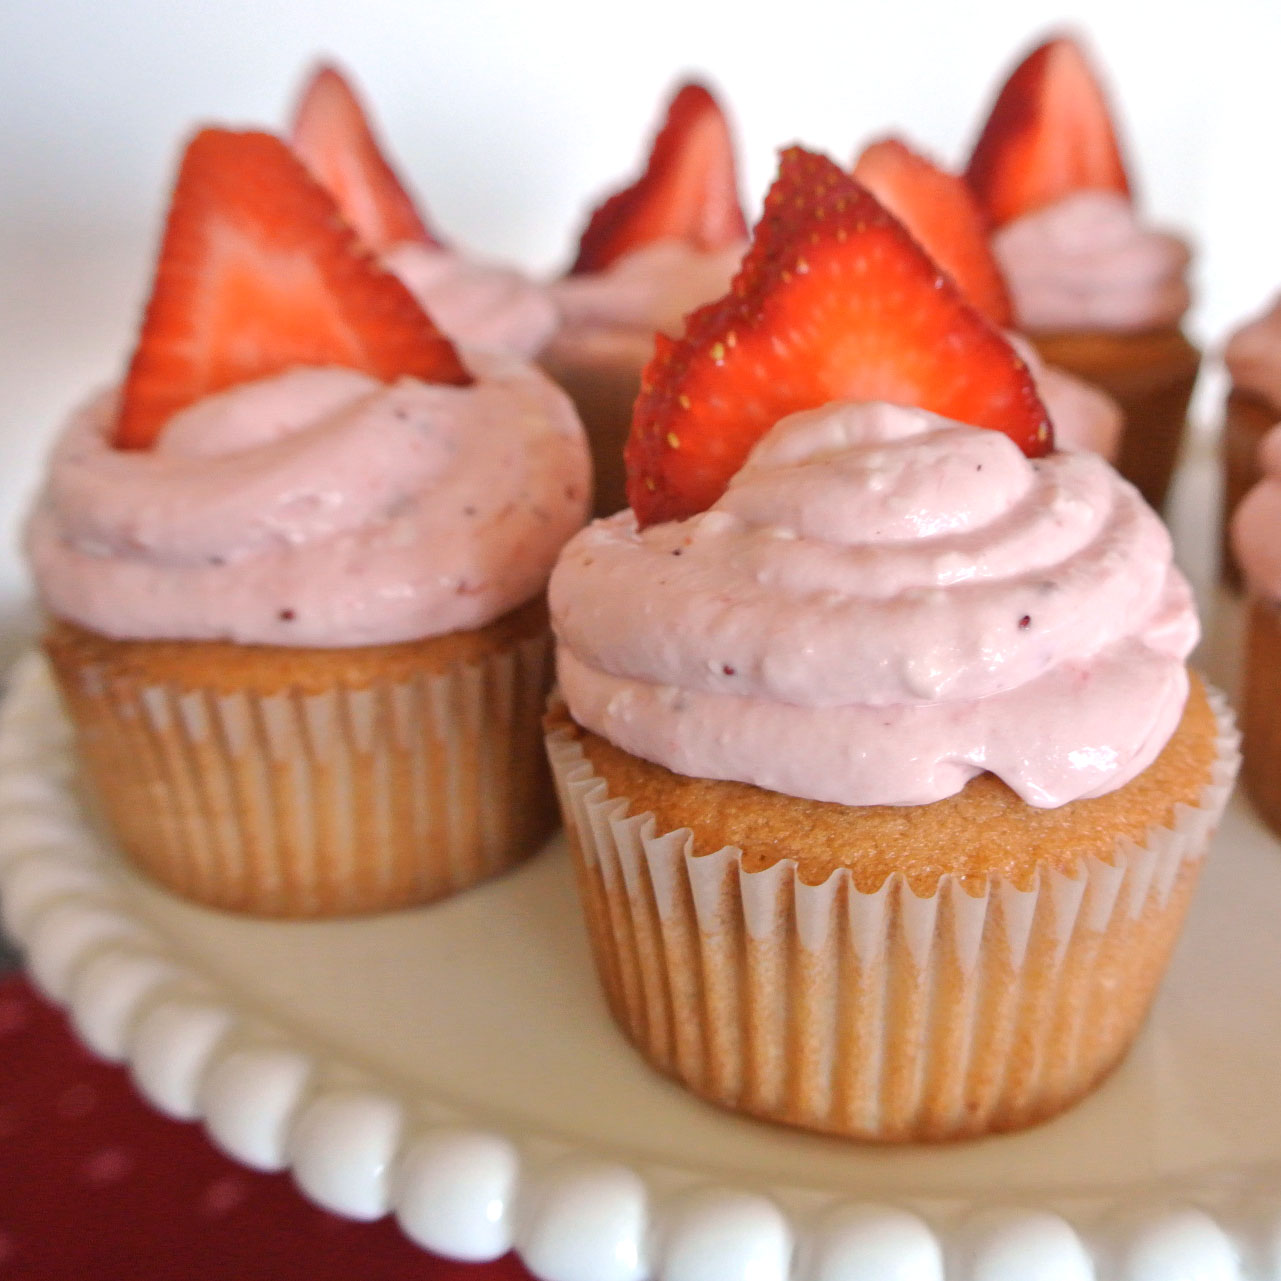 Best Strawberry Cupcake Recipe